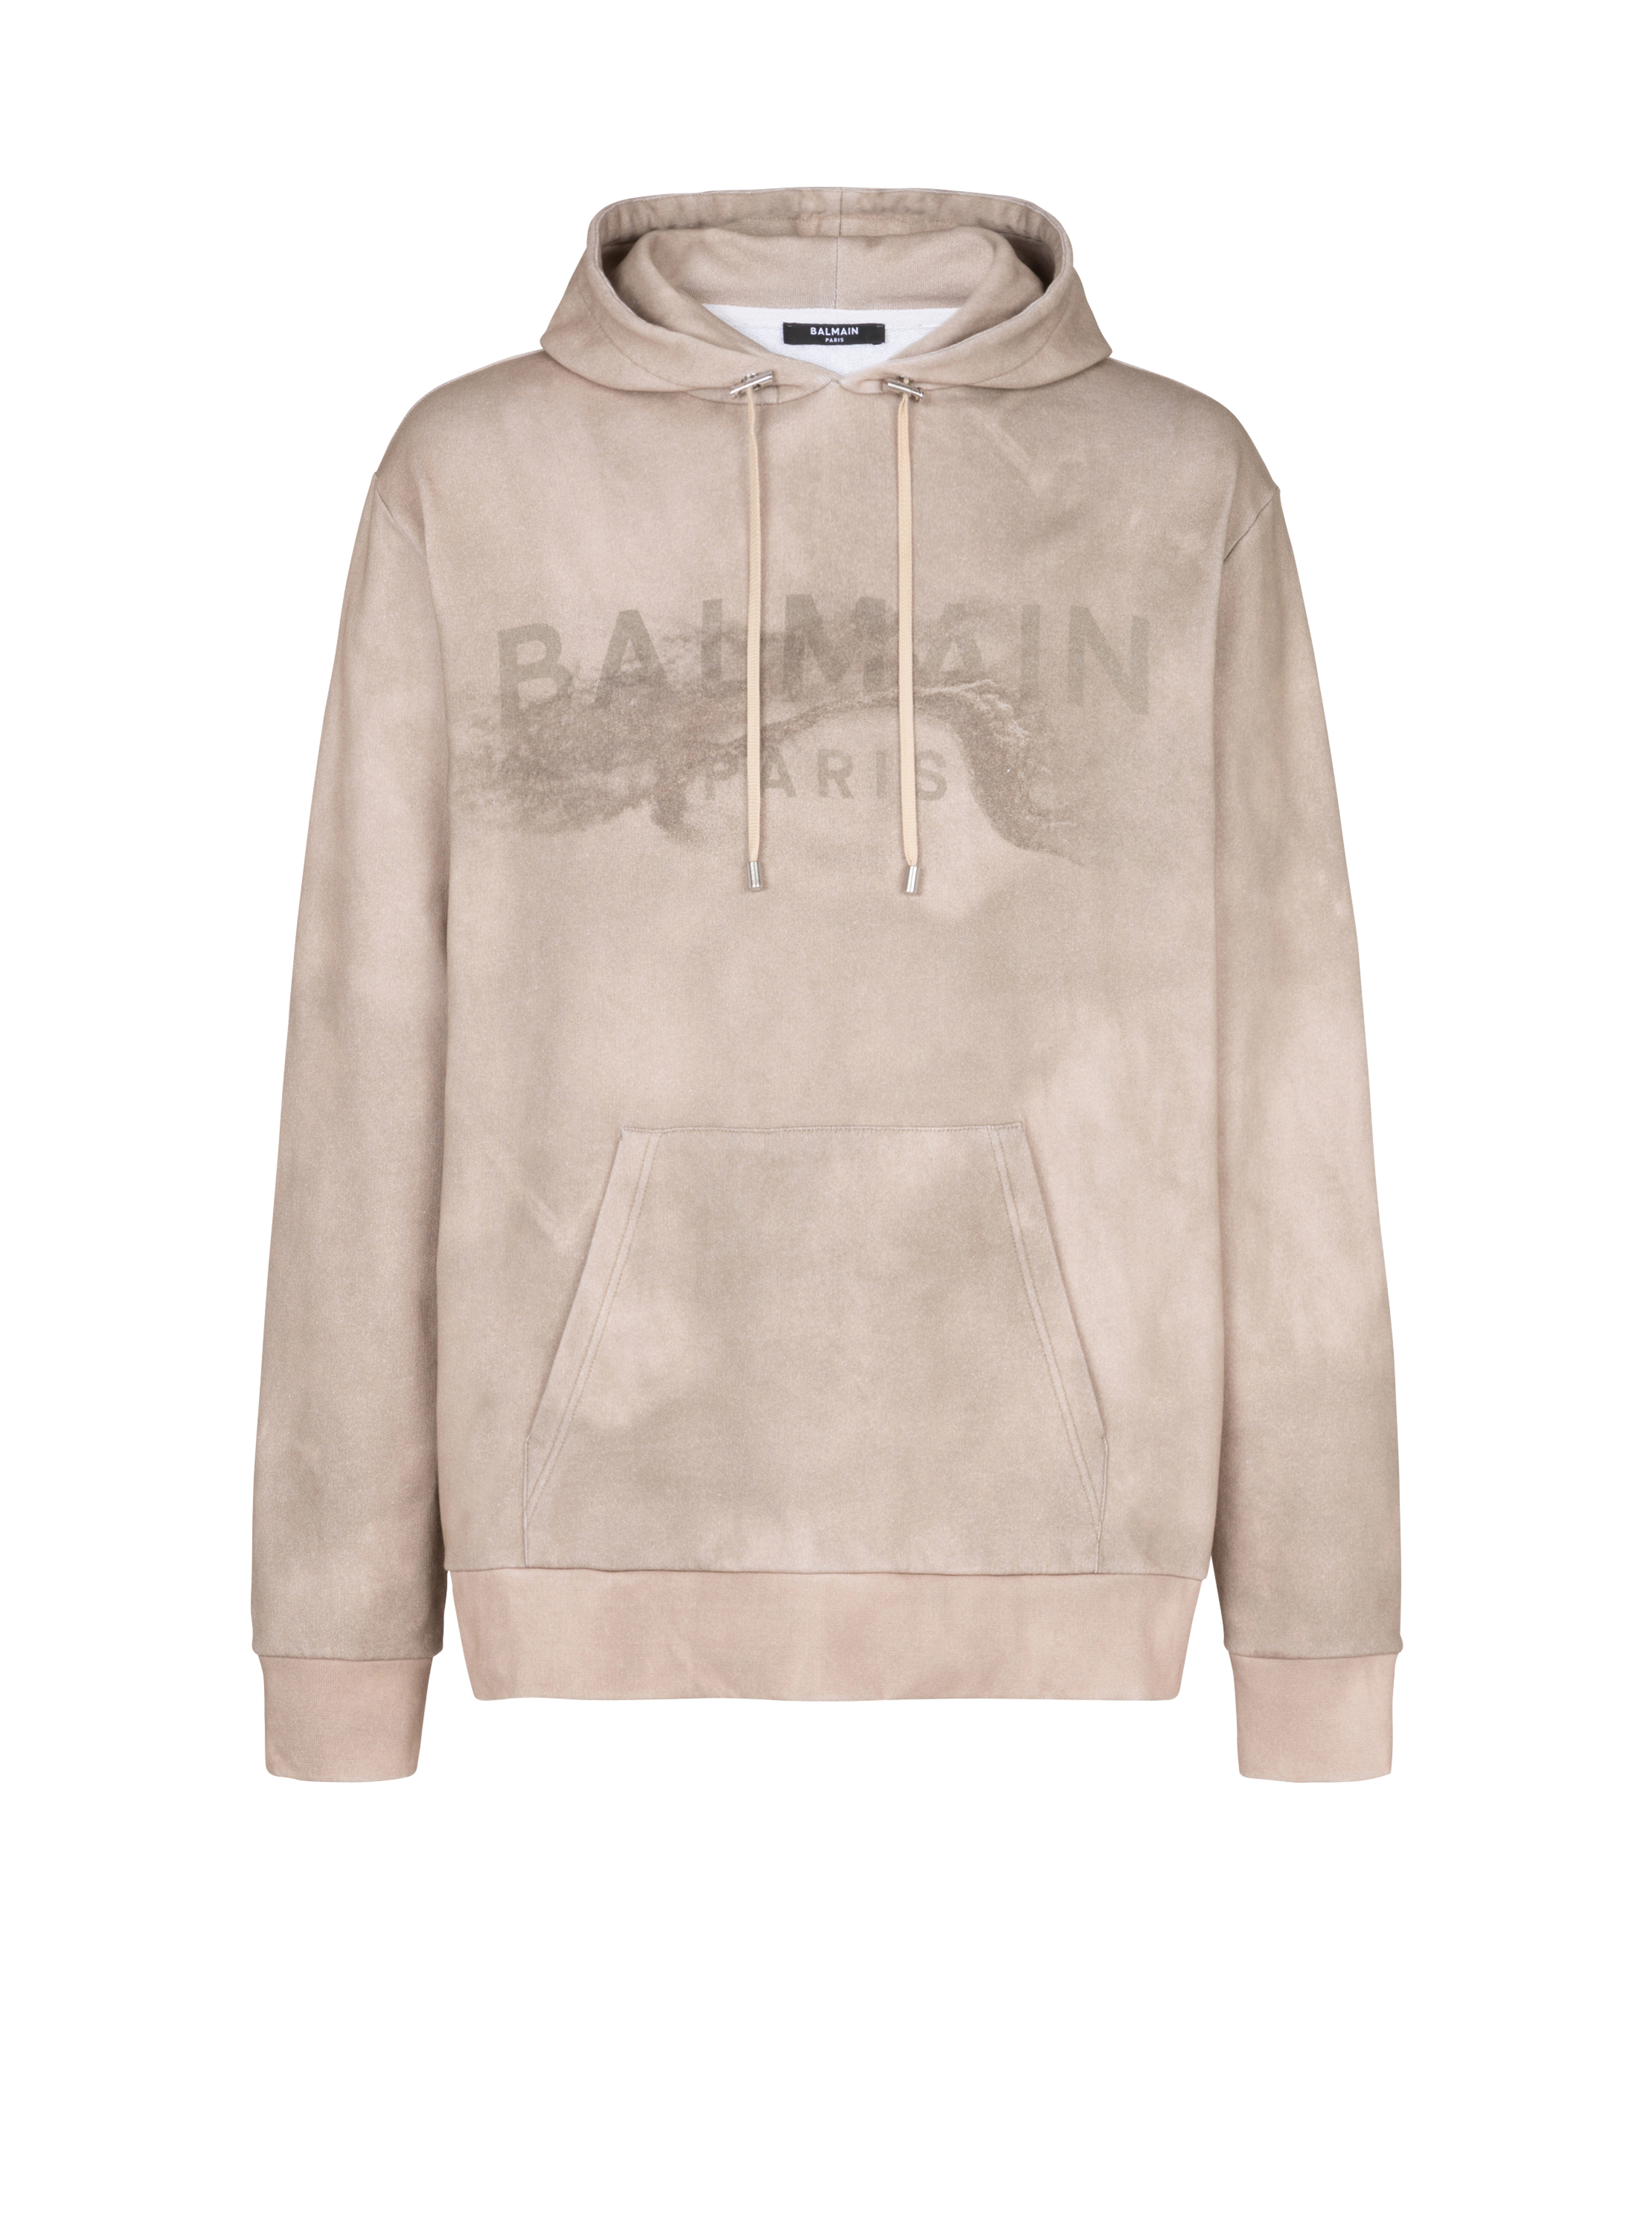 Hoodie in eco-responsible cotton with Balmain Paris desert logo print, beige